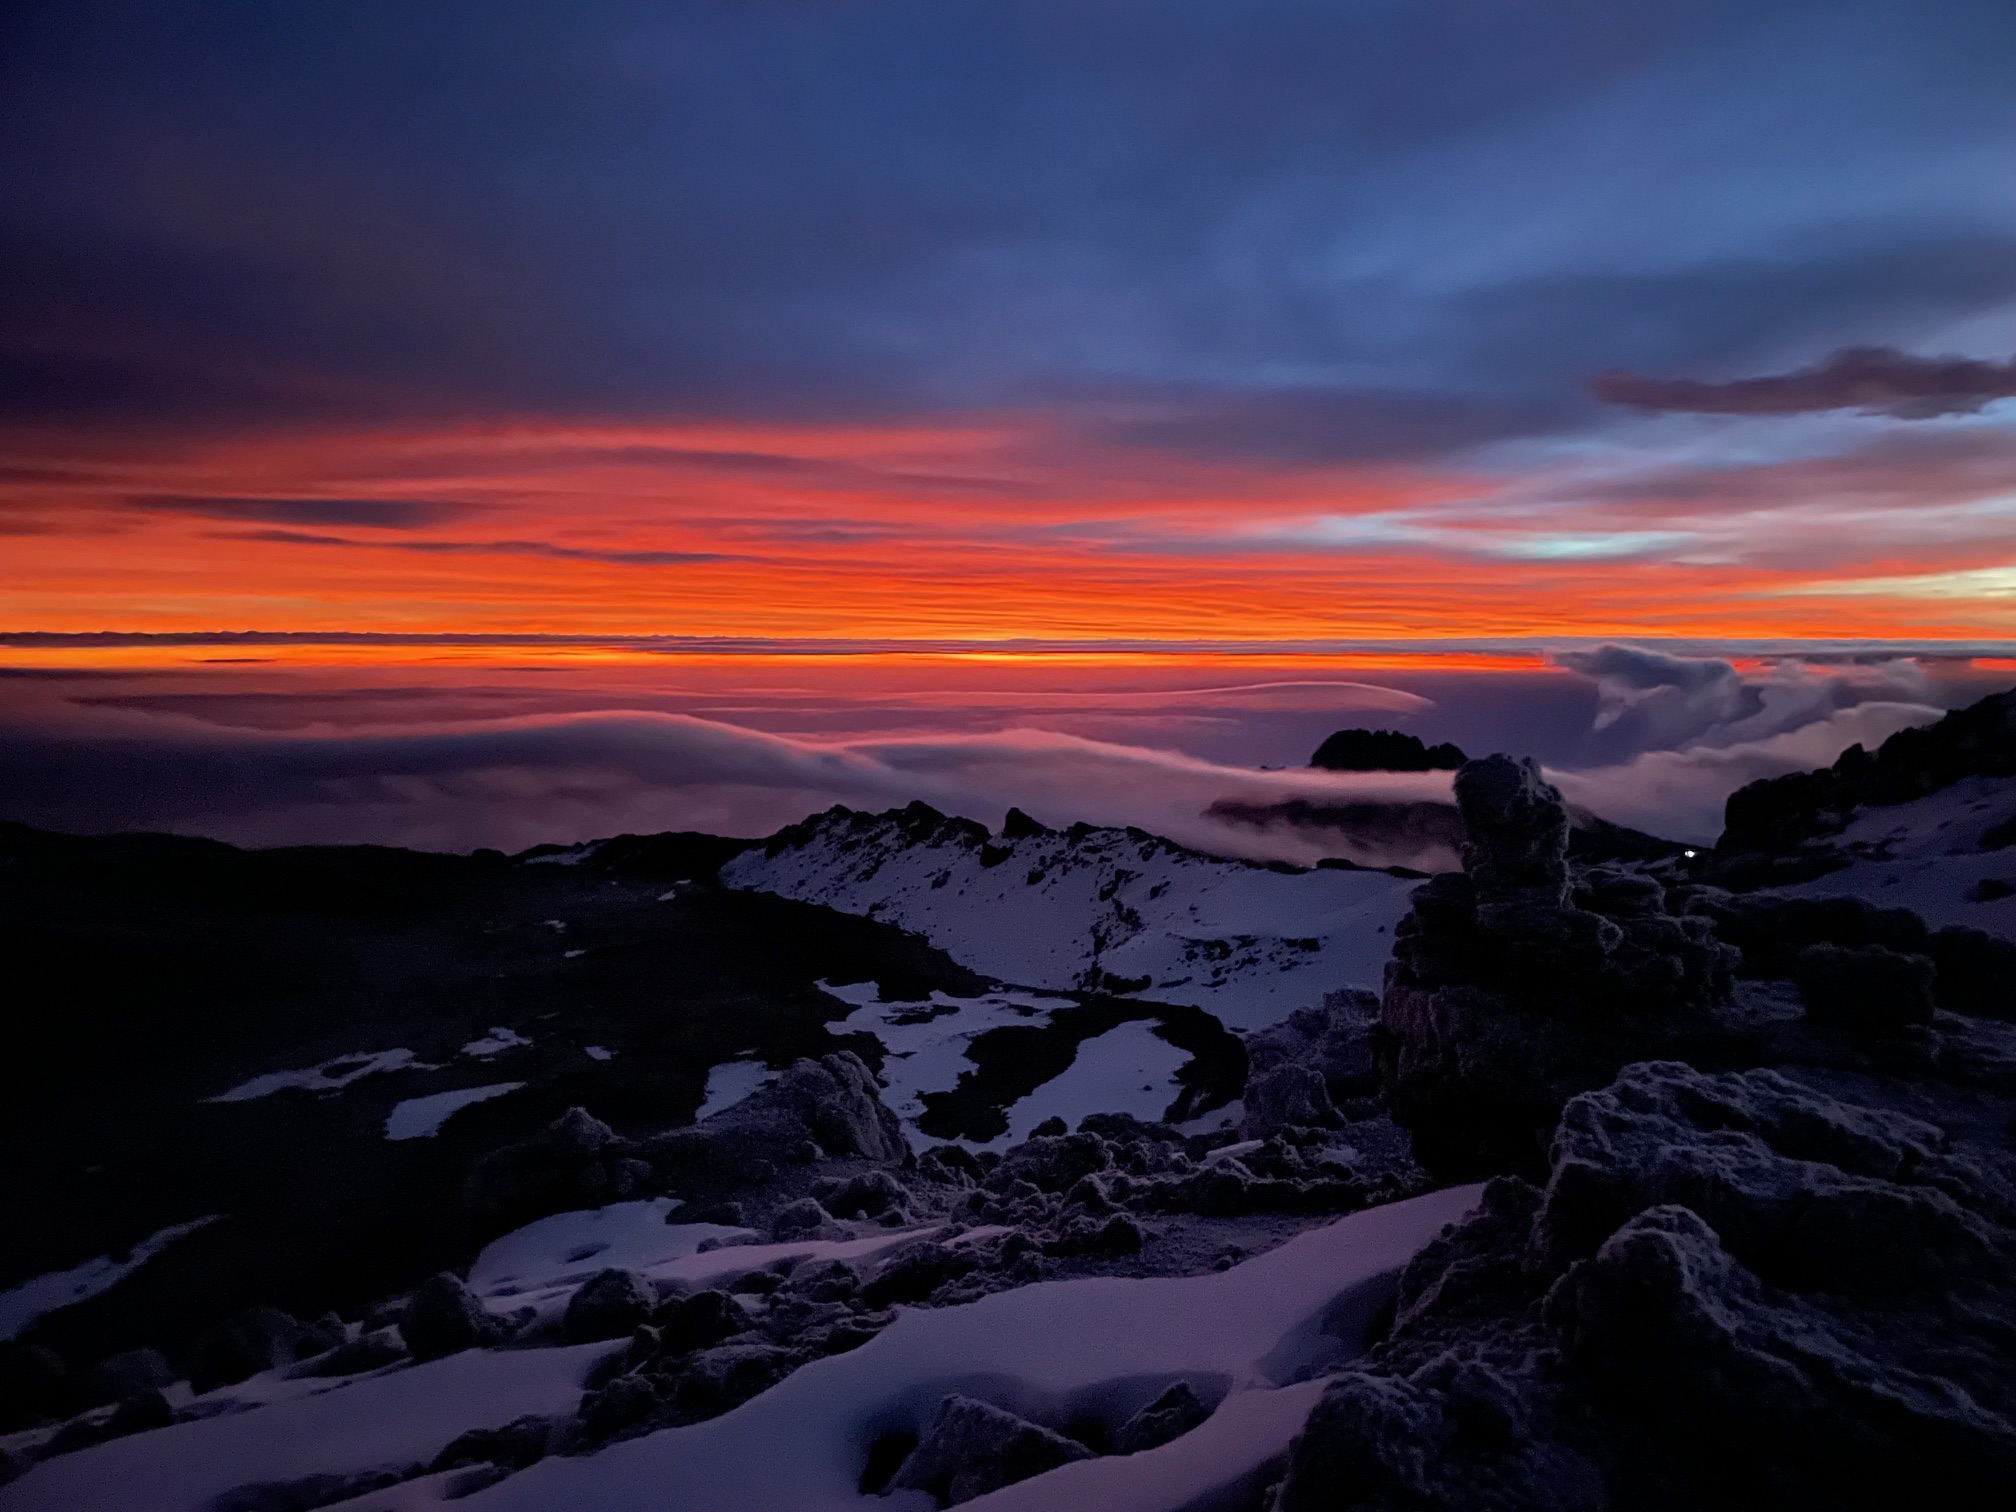 Unique sunrise on Kilimanjaro.